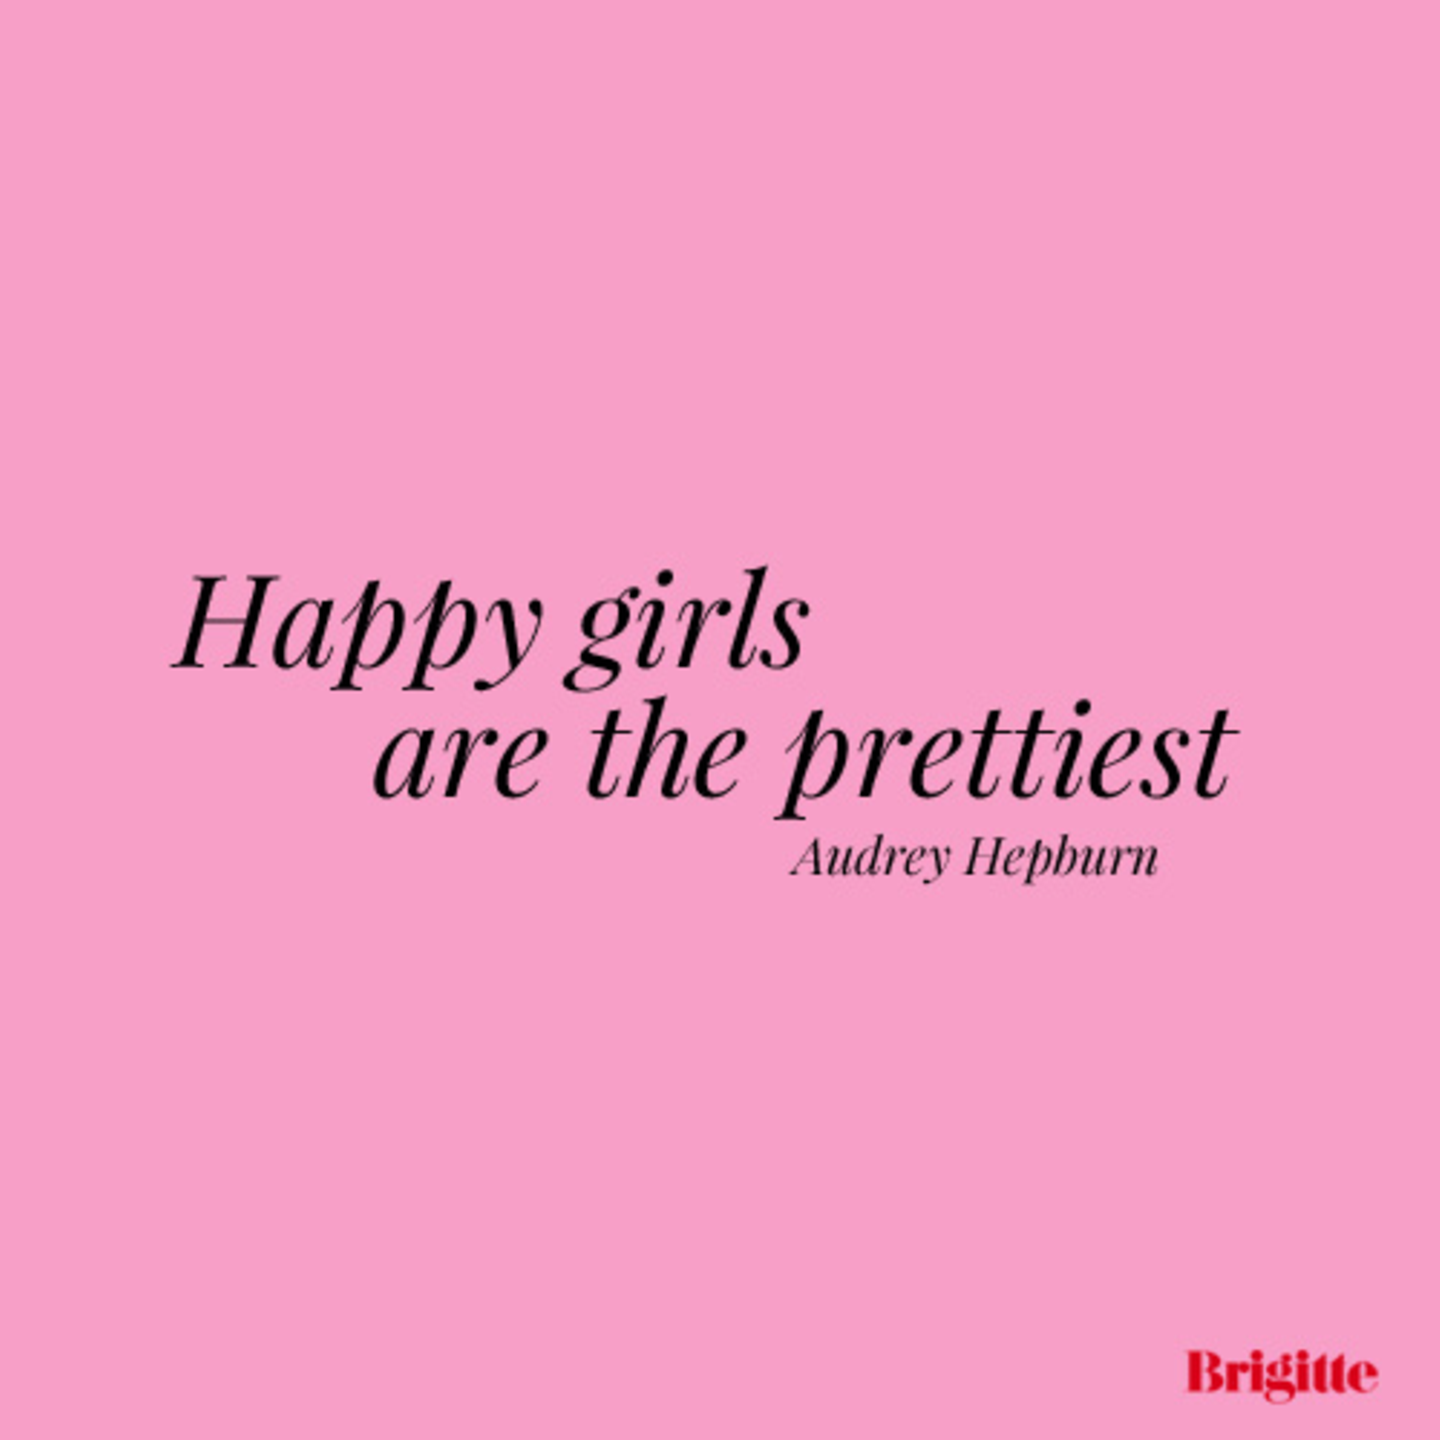 Happy girls are the prettiest.